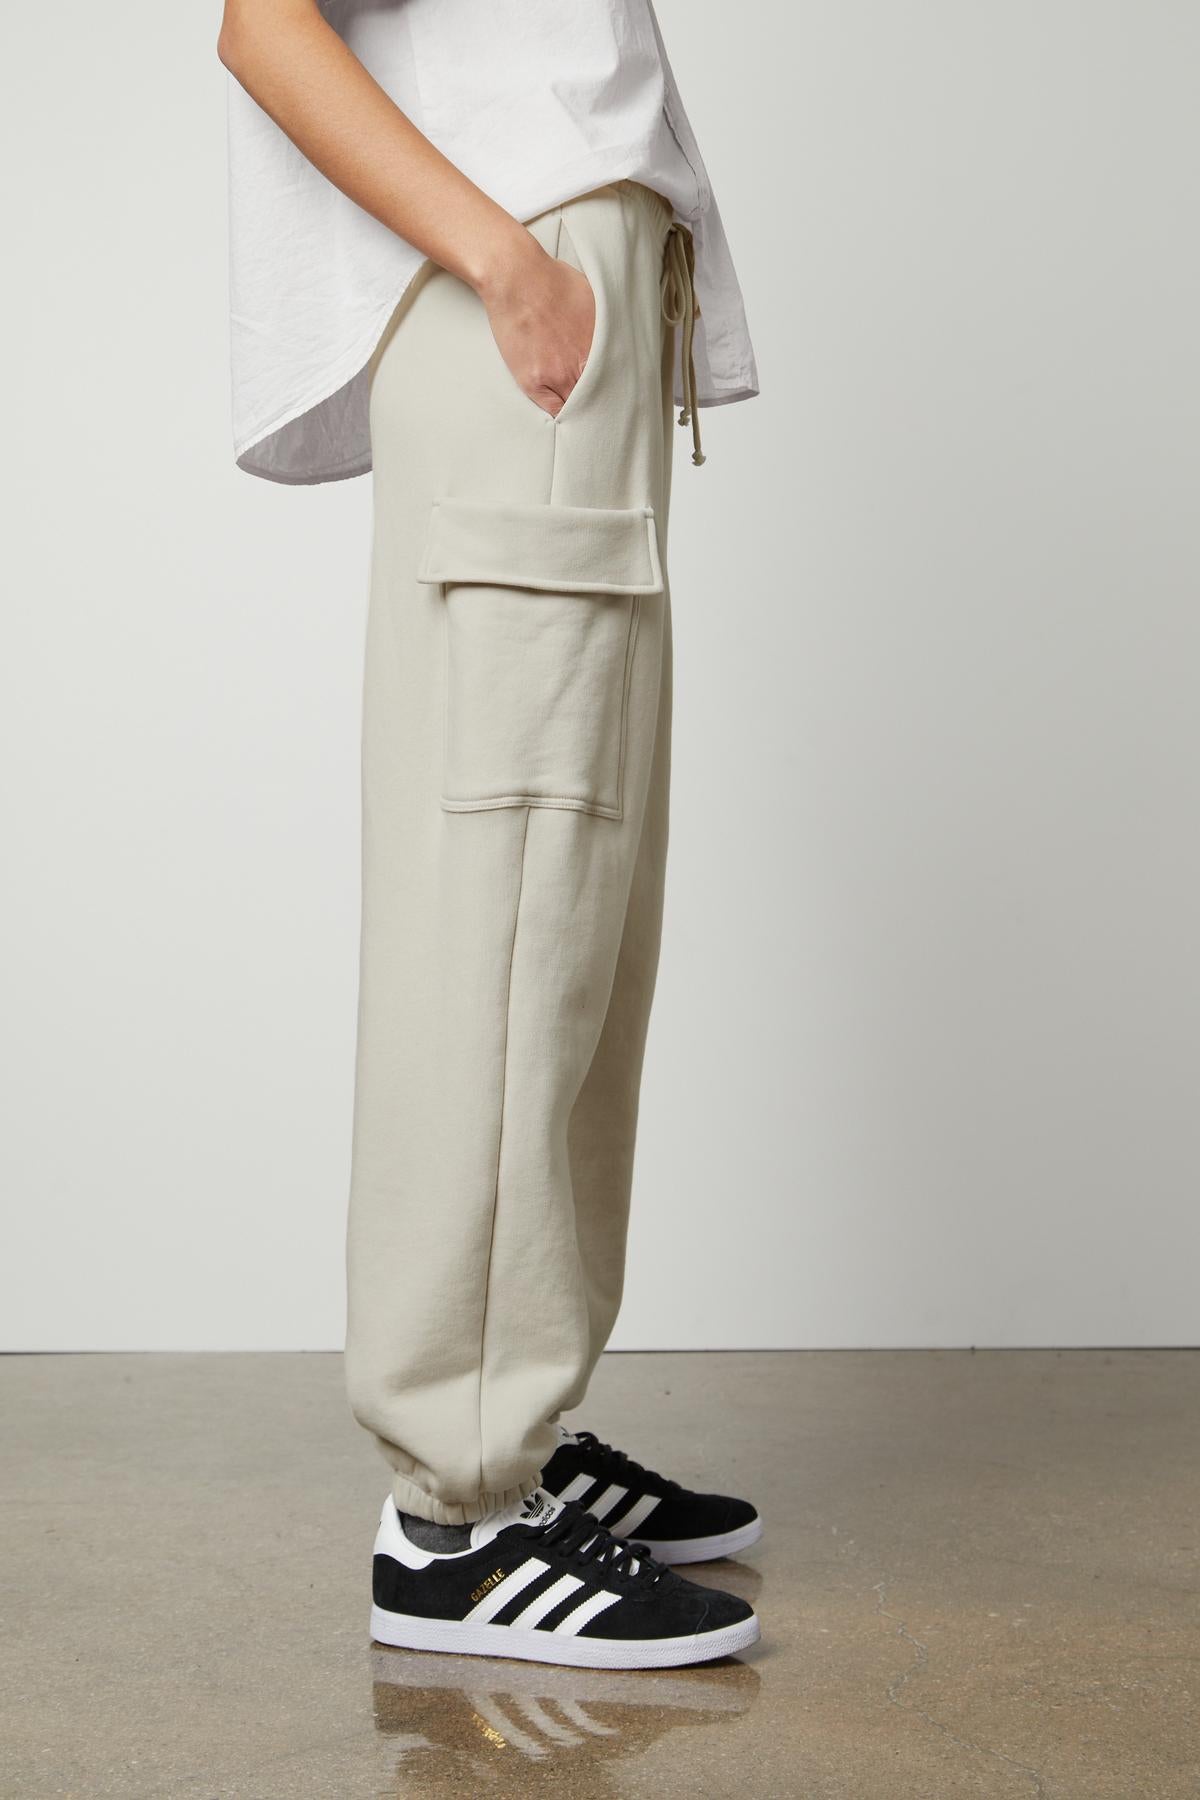 The model is wearing Velvet by Graham & Spencer LUMI DRAWSTRING WAIST SWEATPANT for everyday wear.-35660369428673